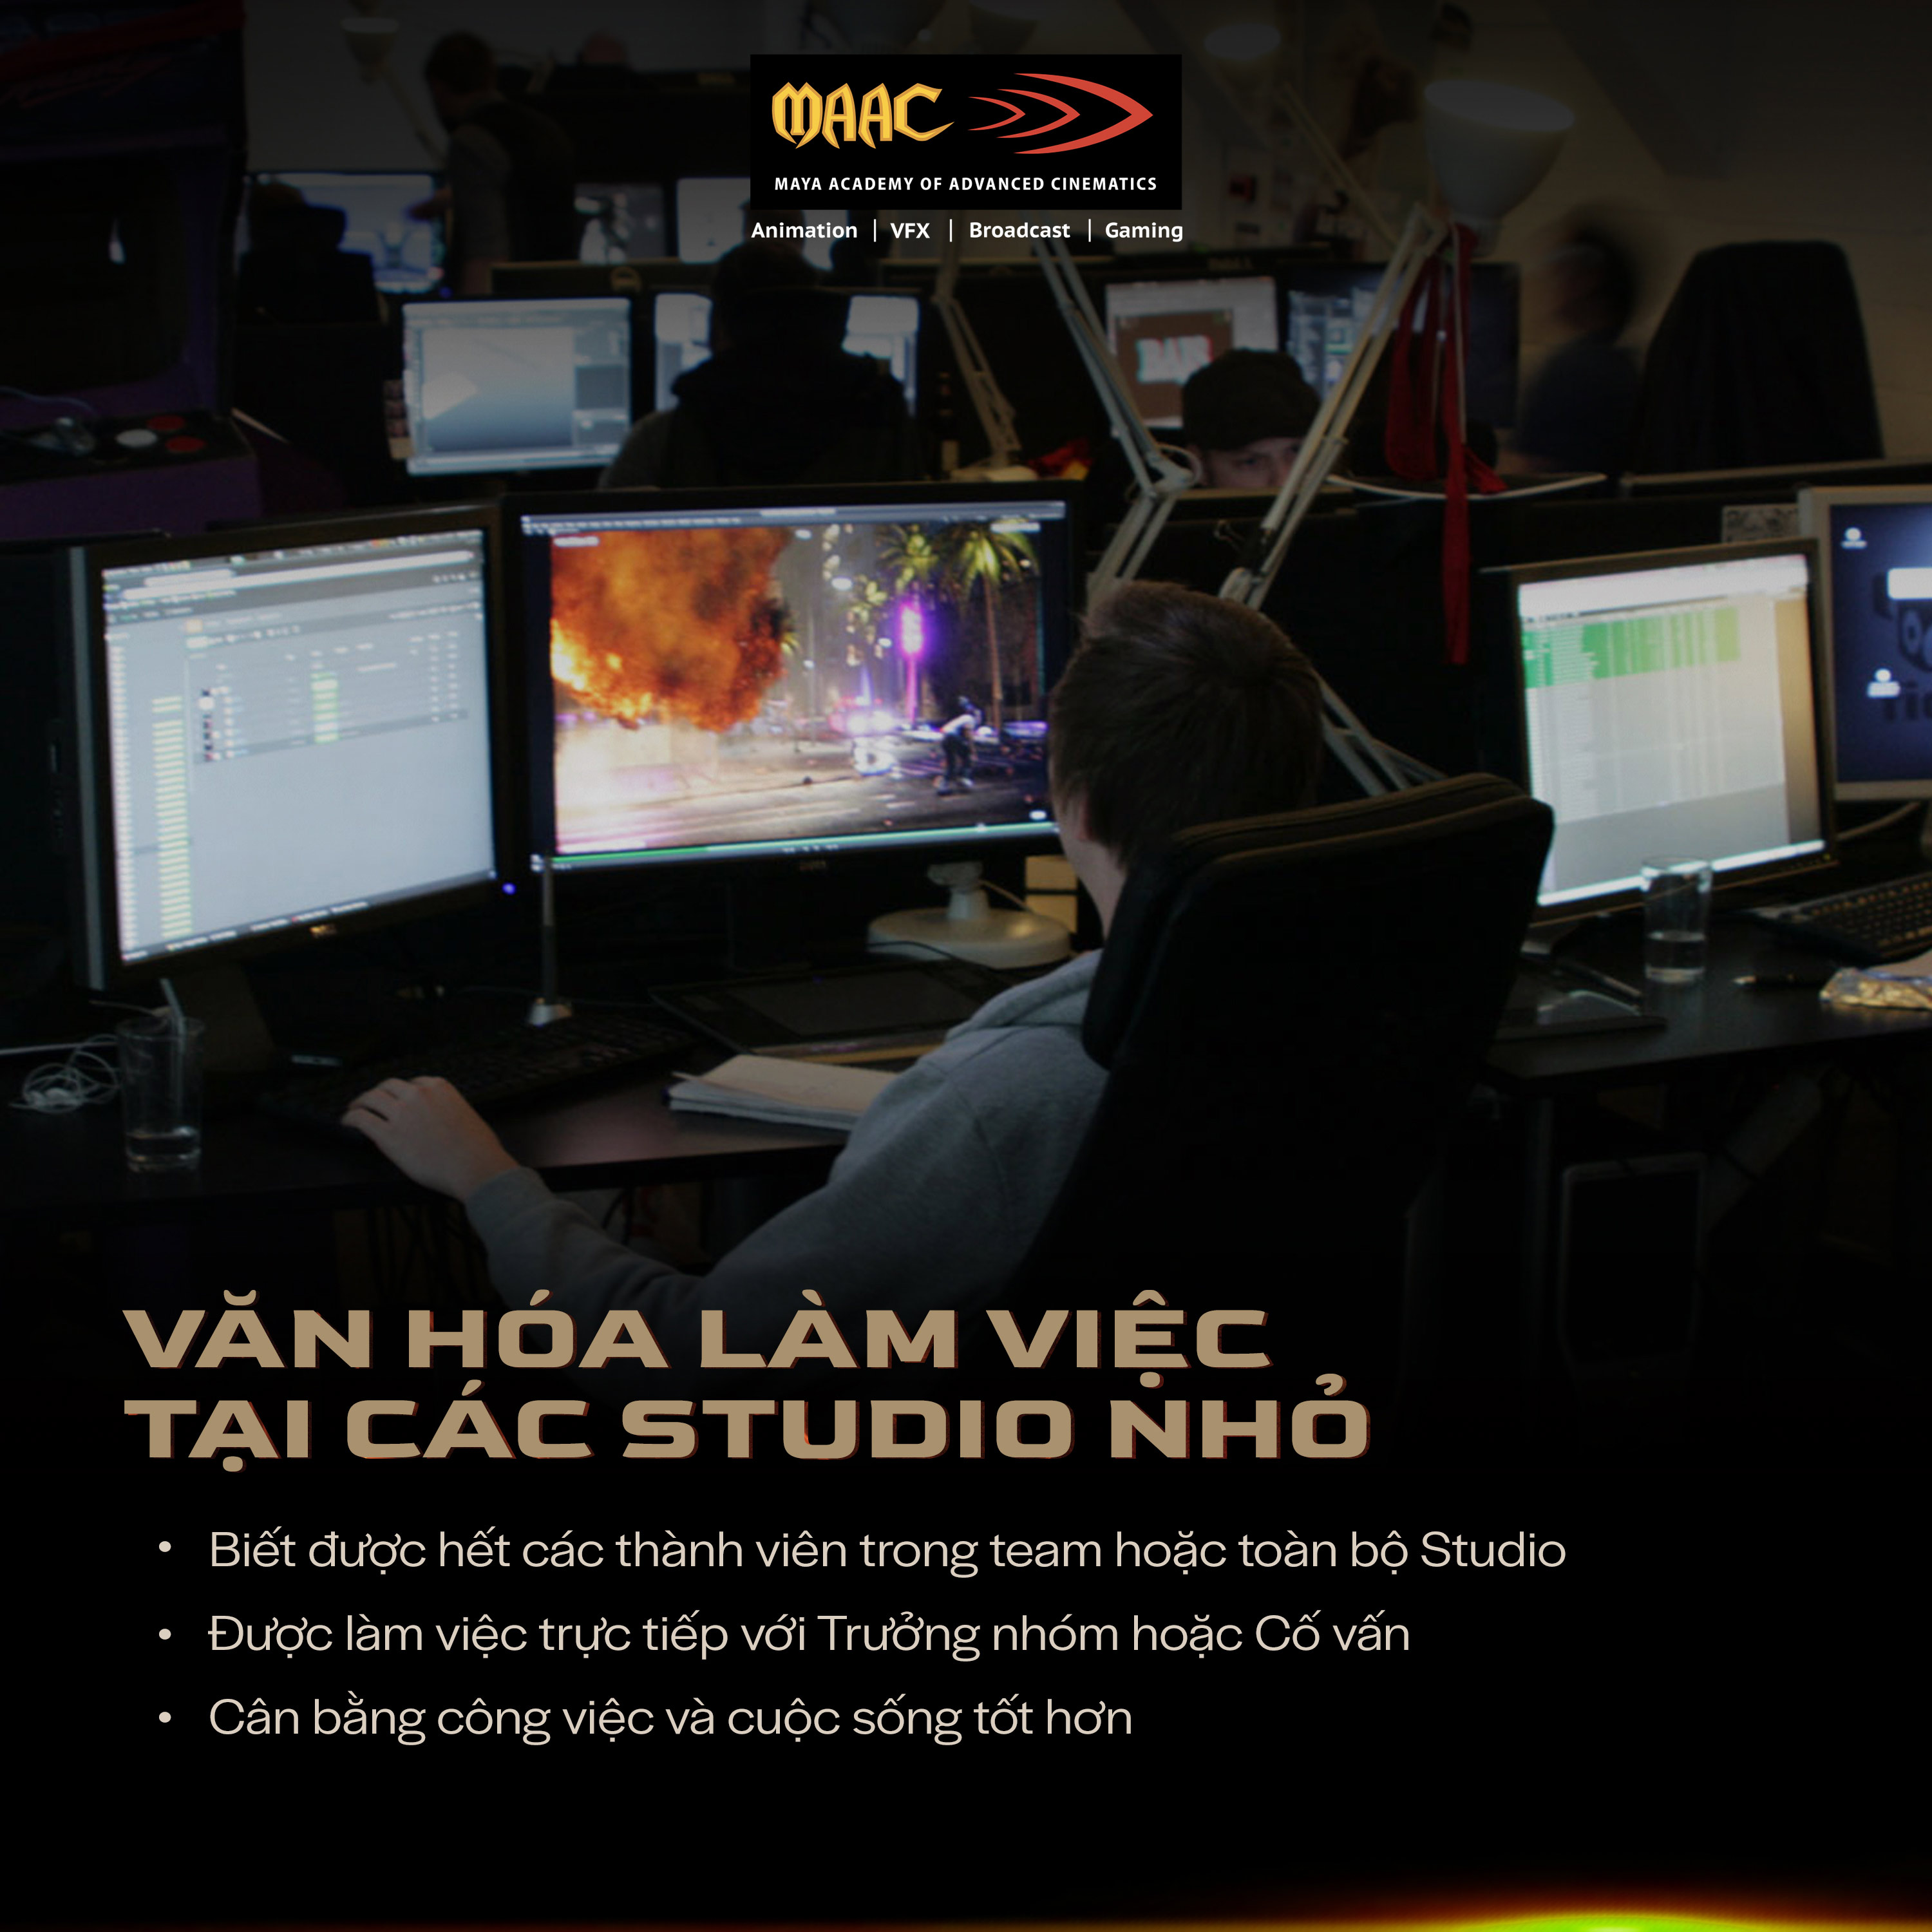 1-studio-vfx-quy-mo-nho-va-lon-ban-nen-lam-viec-cho-loai-hinh-nao